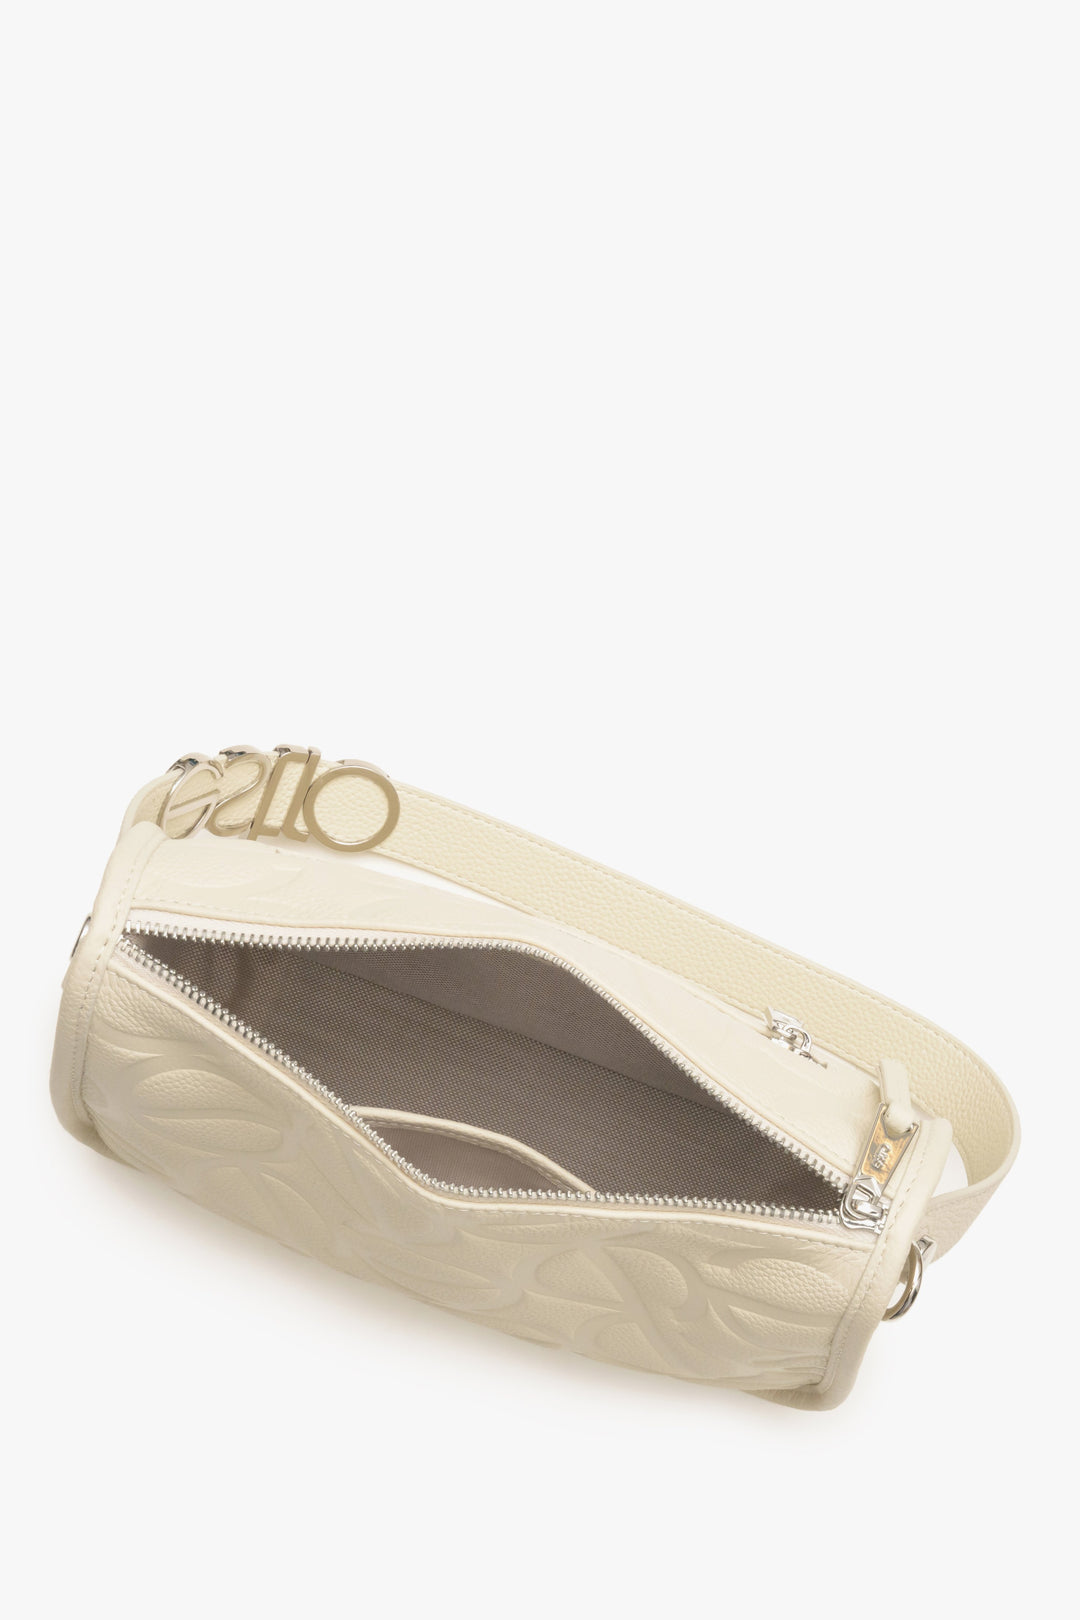 Women's cream beige shoulder bag Estro - a close-up on the main compartment.